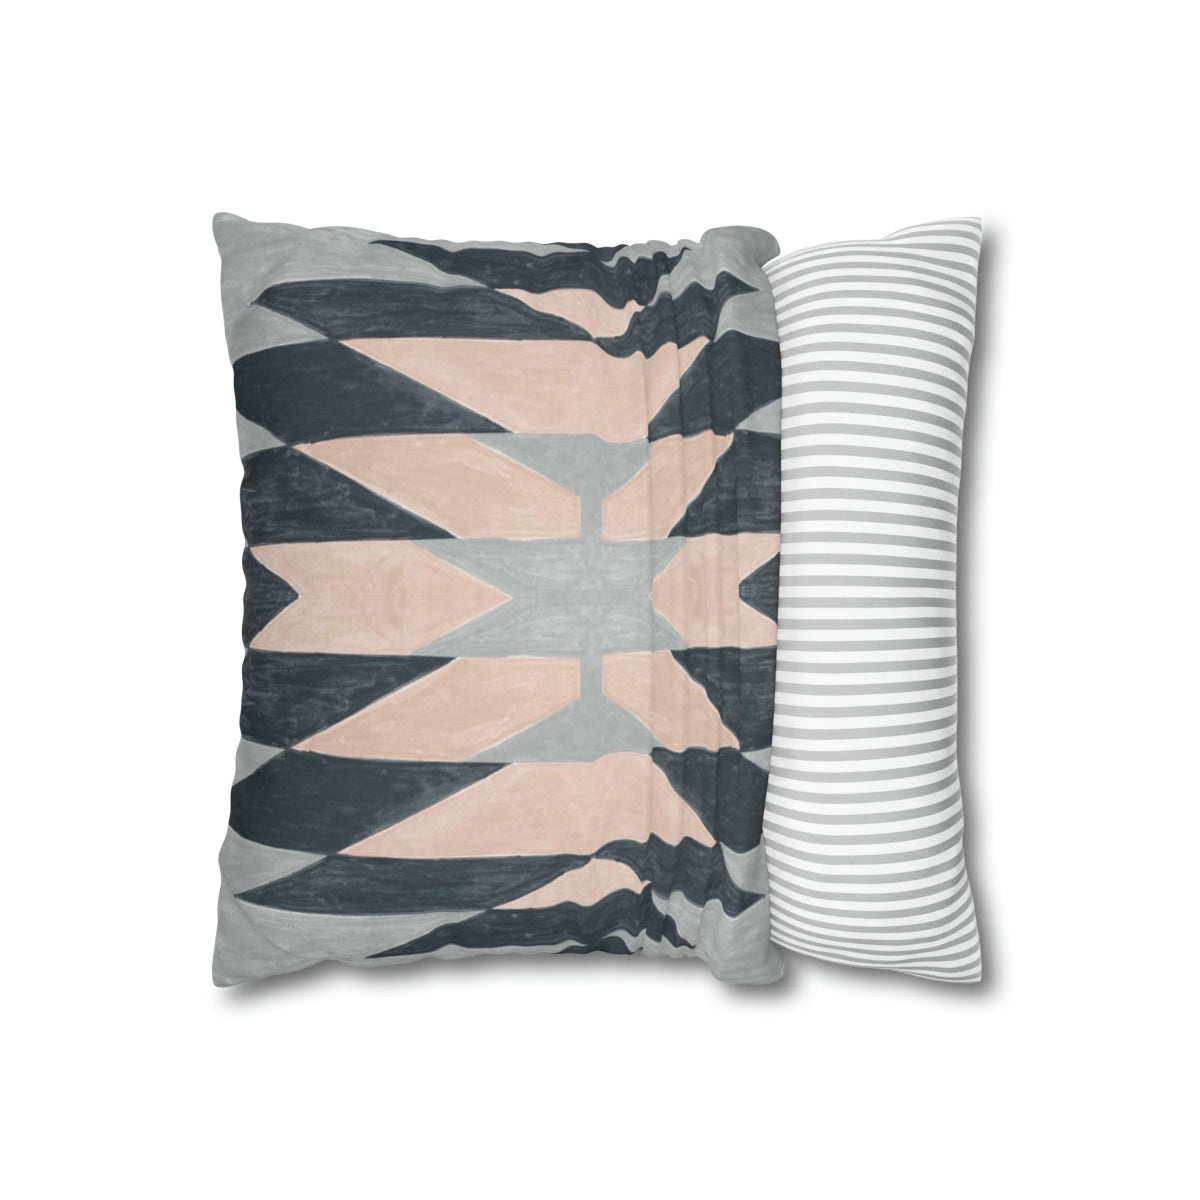 Cortez Microsuede Square Pillow Cover